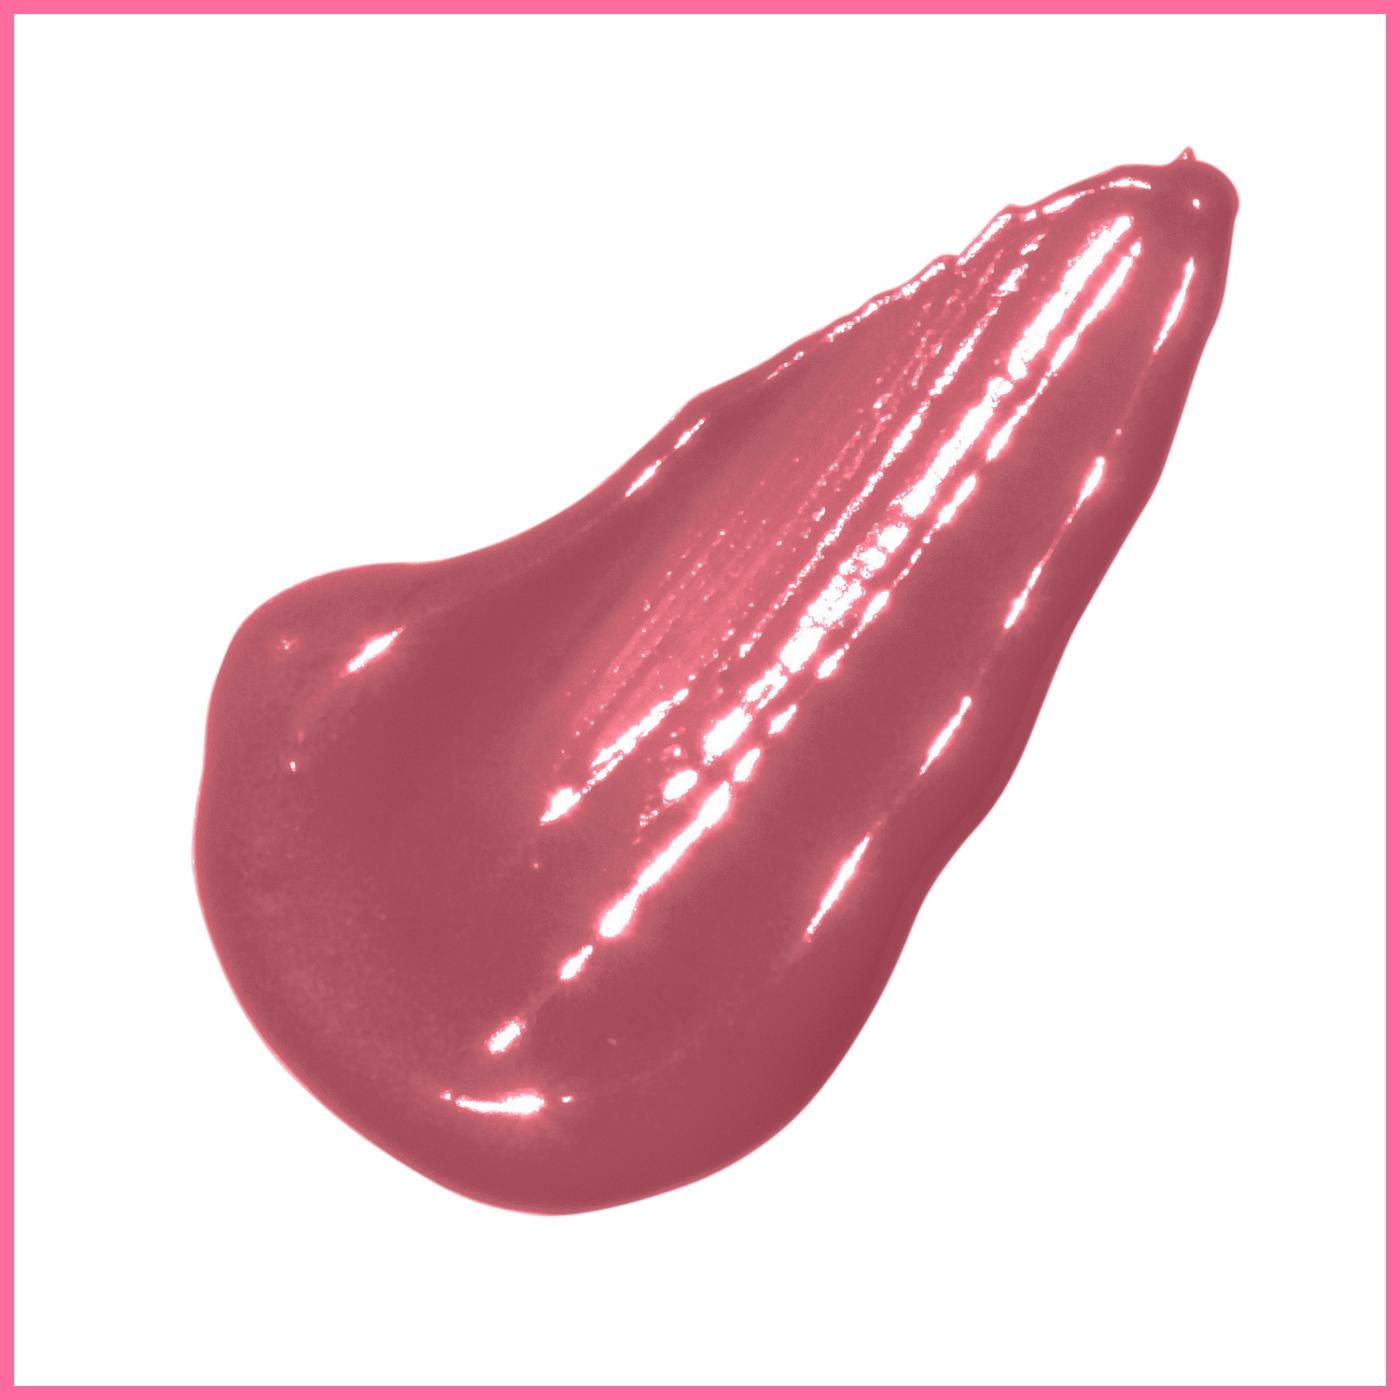 Revlon ColorStay Satin Ink Liquid Lipstick, Your Majesty; image 3 of 7